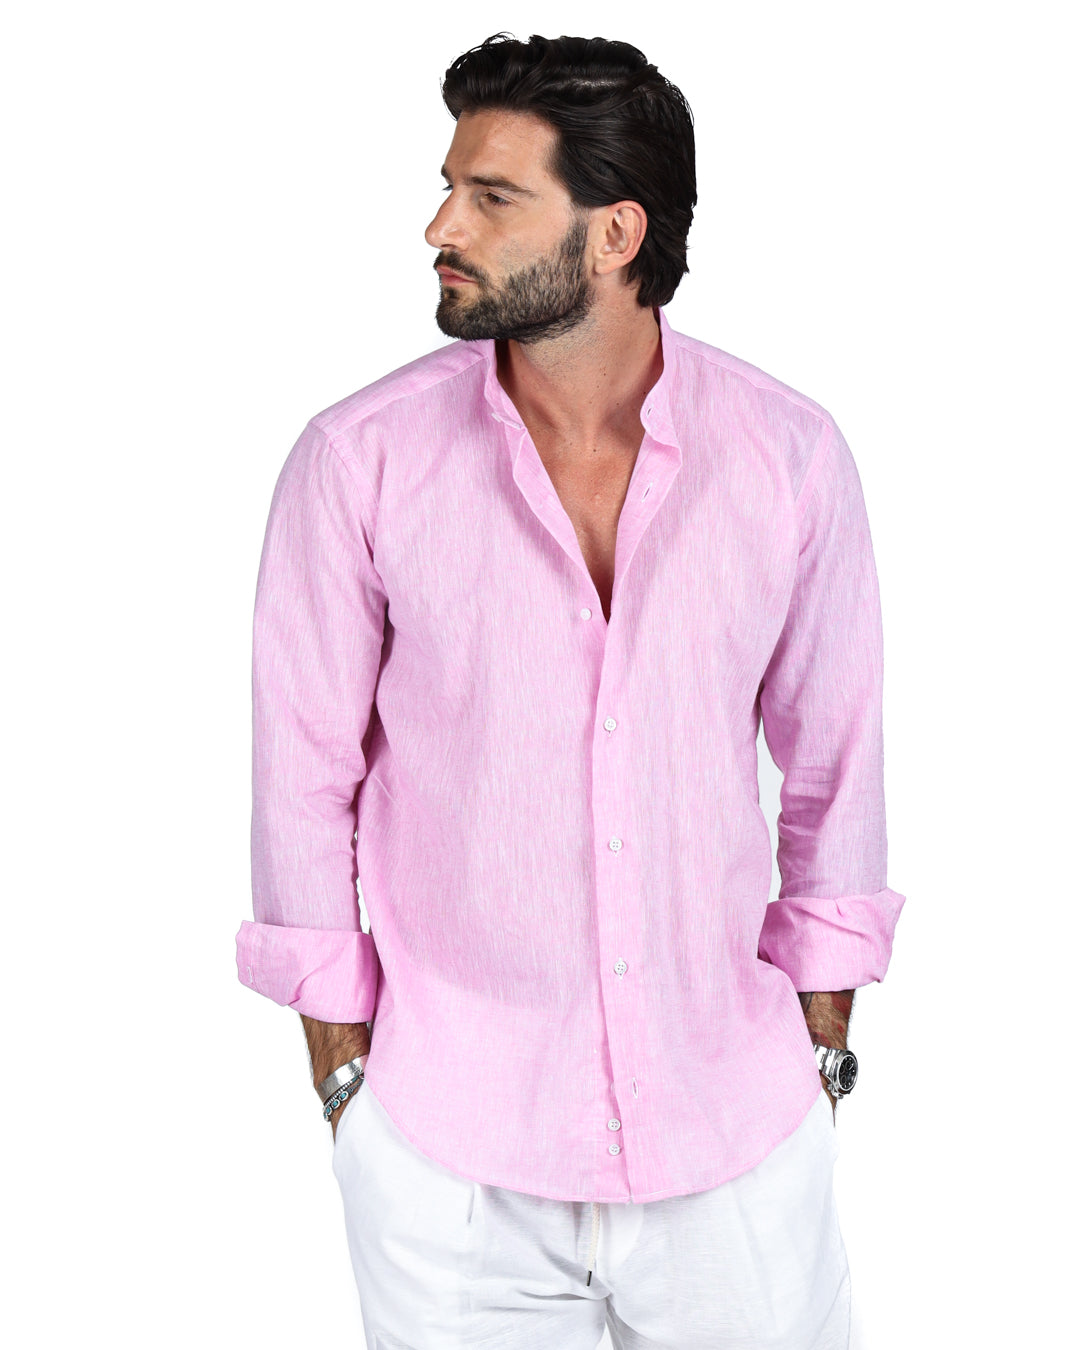 Positano - Pink Korean linen shirt